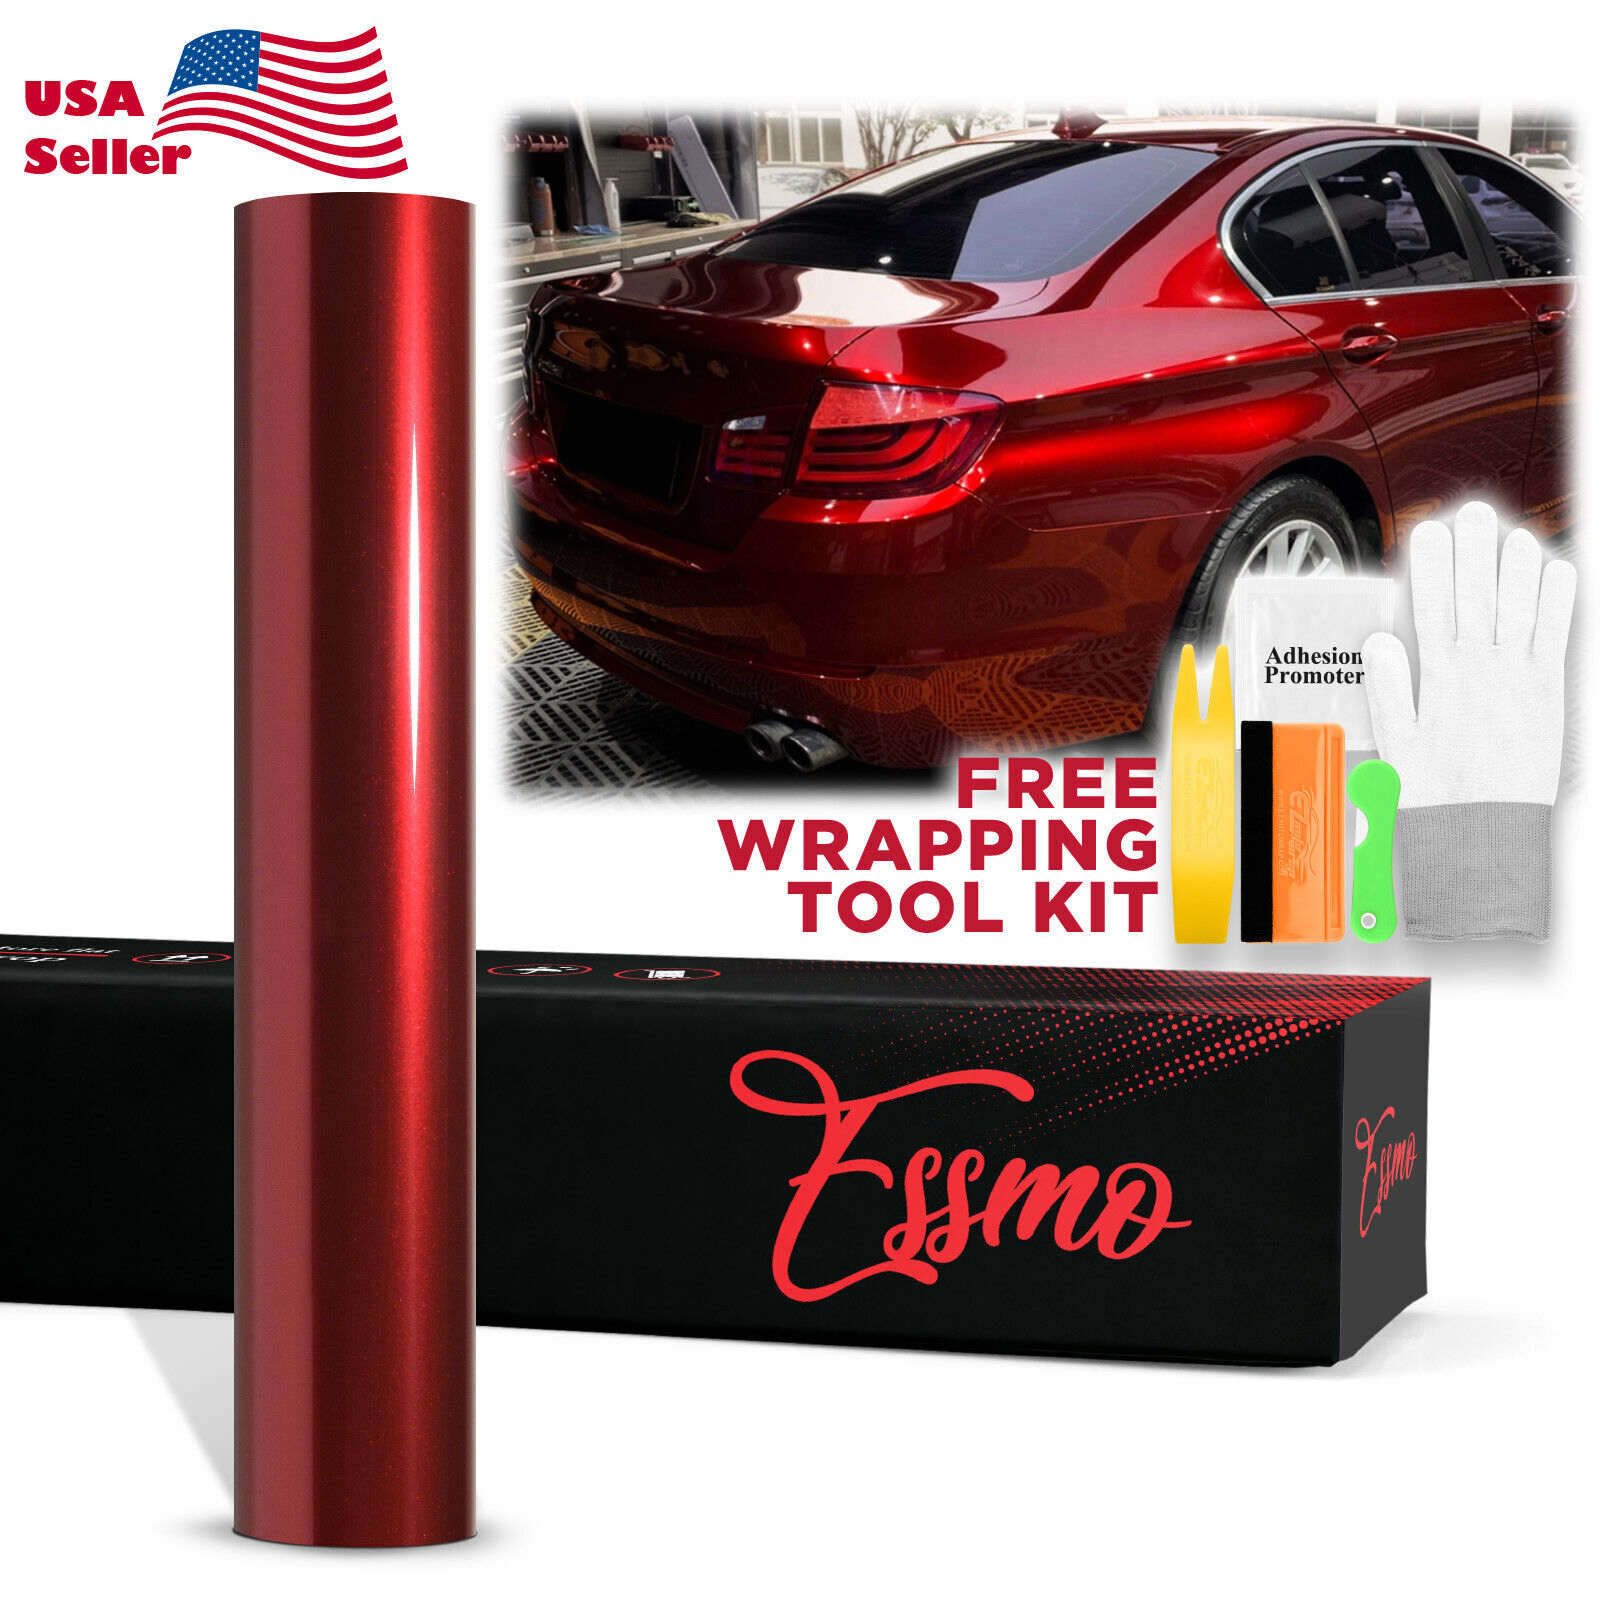 ESSMO PET Super Gloss Metallic Cherry Red Vehicle Vinyl Wrap Decal Like Paint